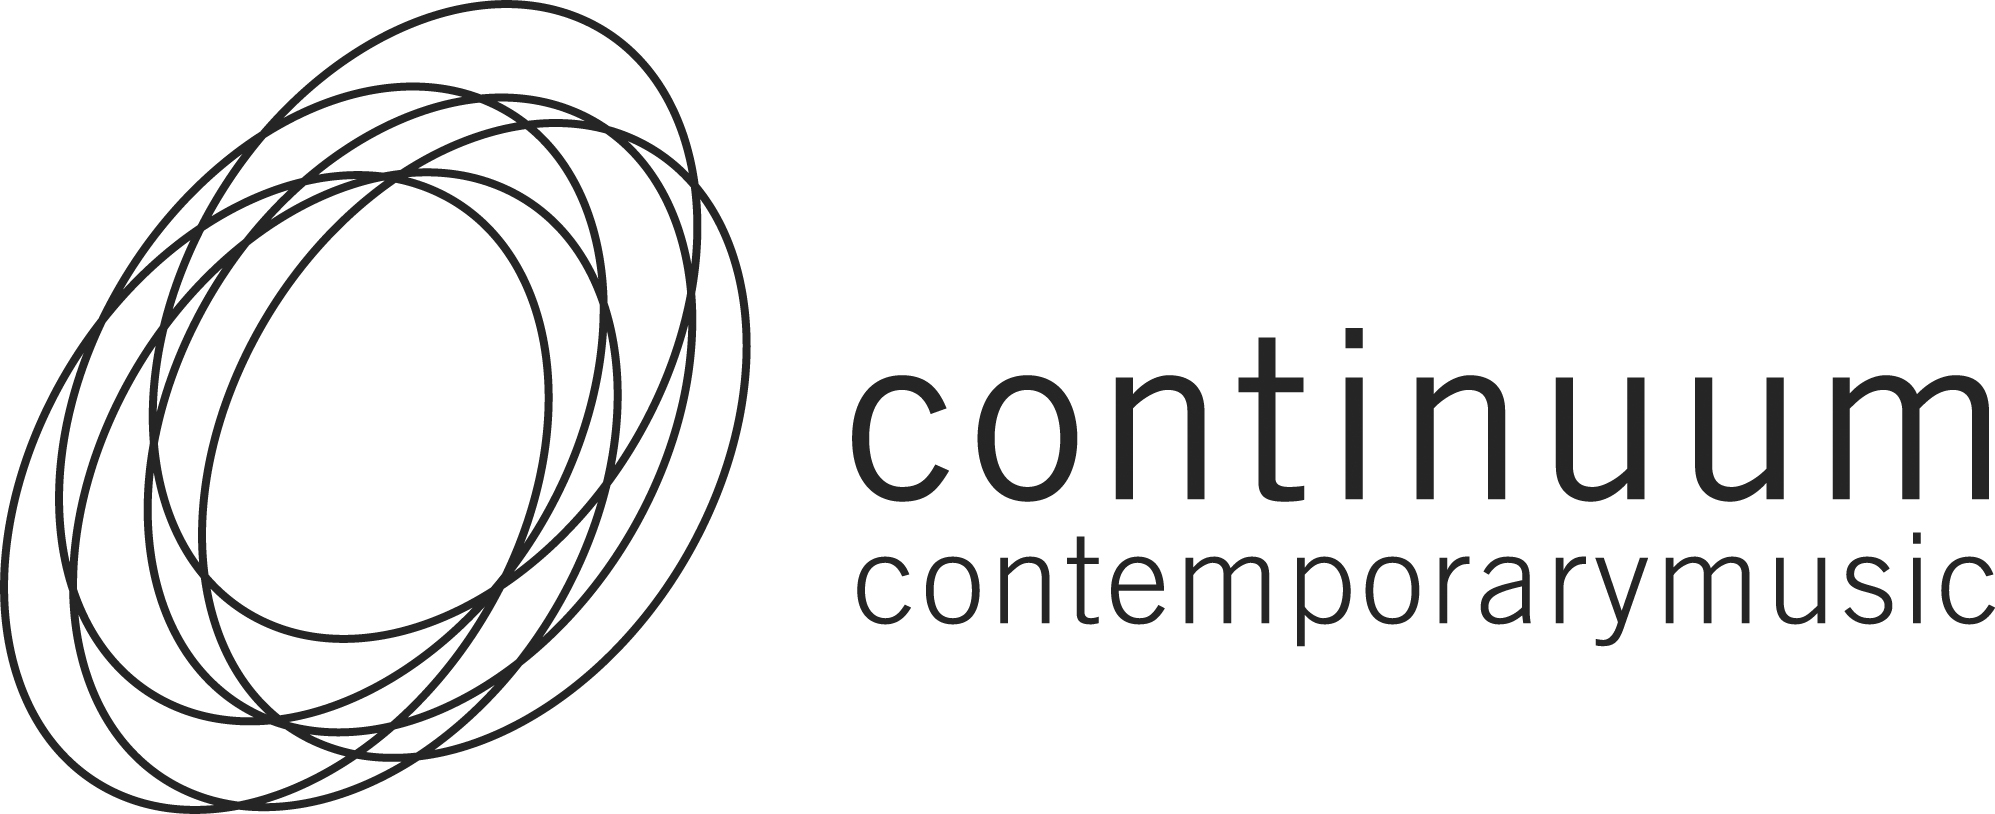 continuum logo - HI RES - black full text justified